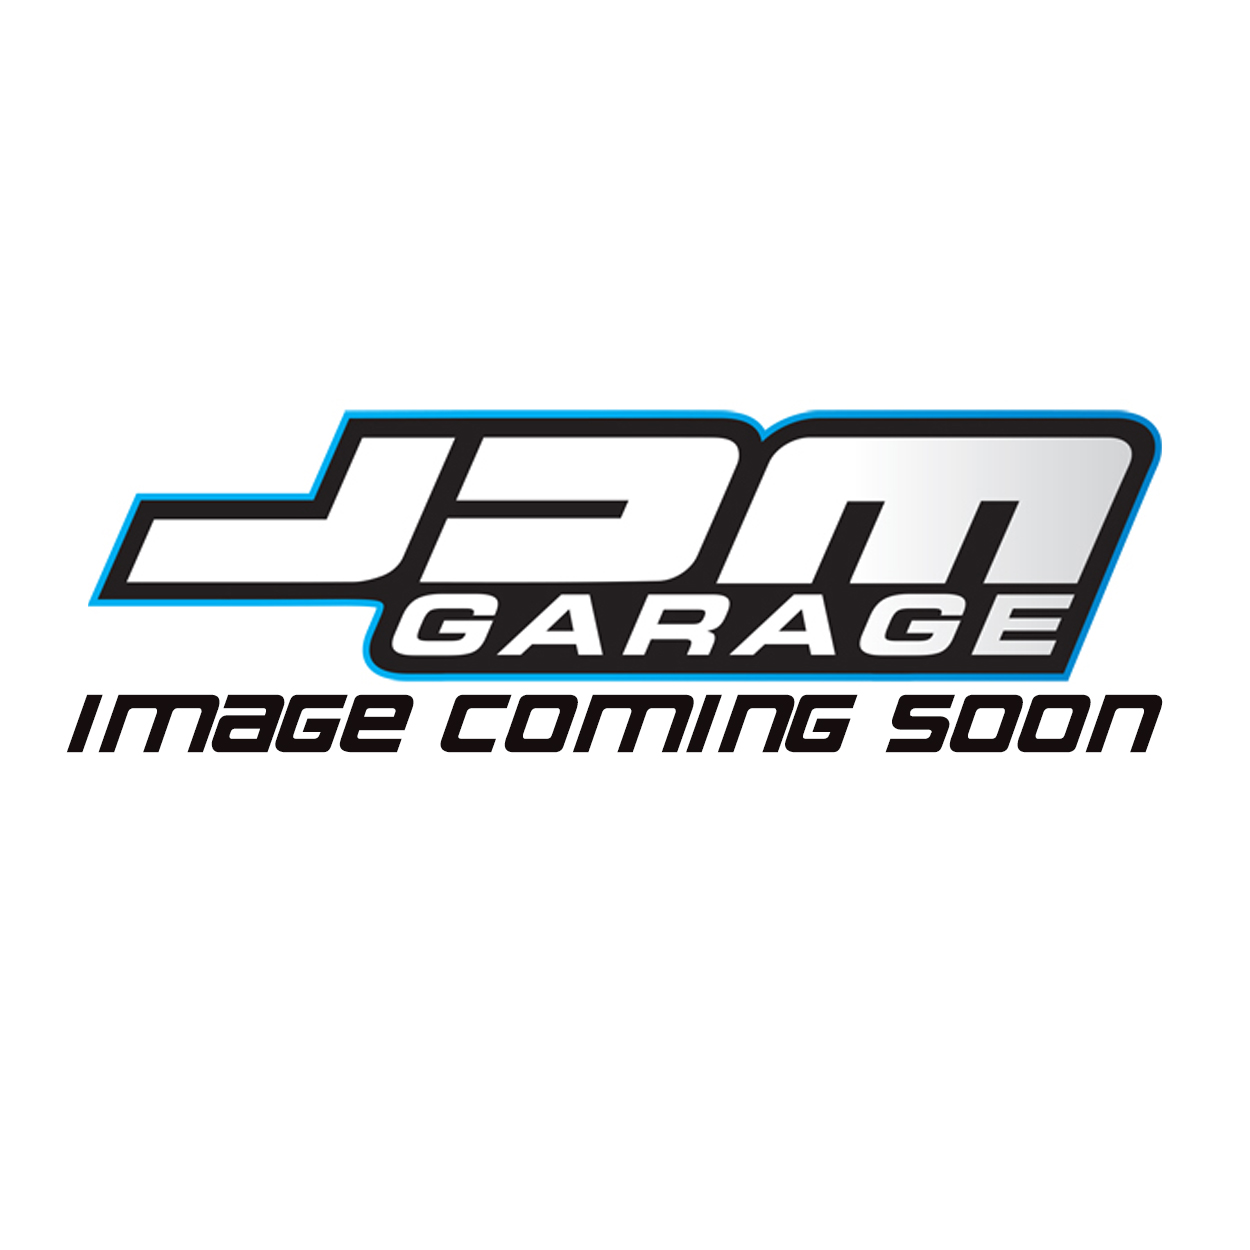 SR20DET Straight Cam Engine Rebuild Package - Nissan Silvia S13 180SX